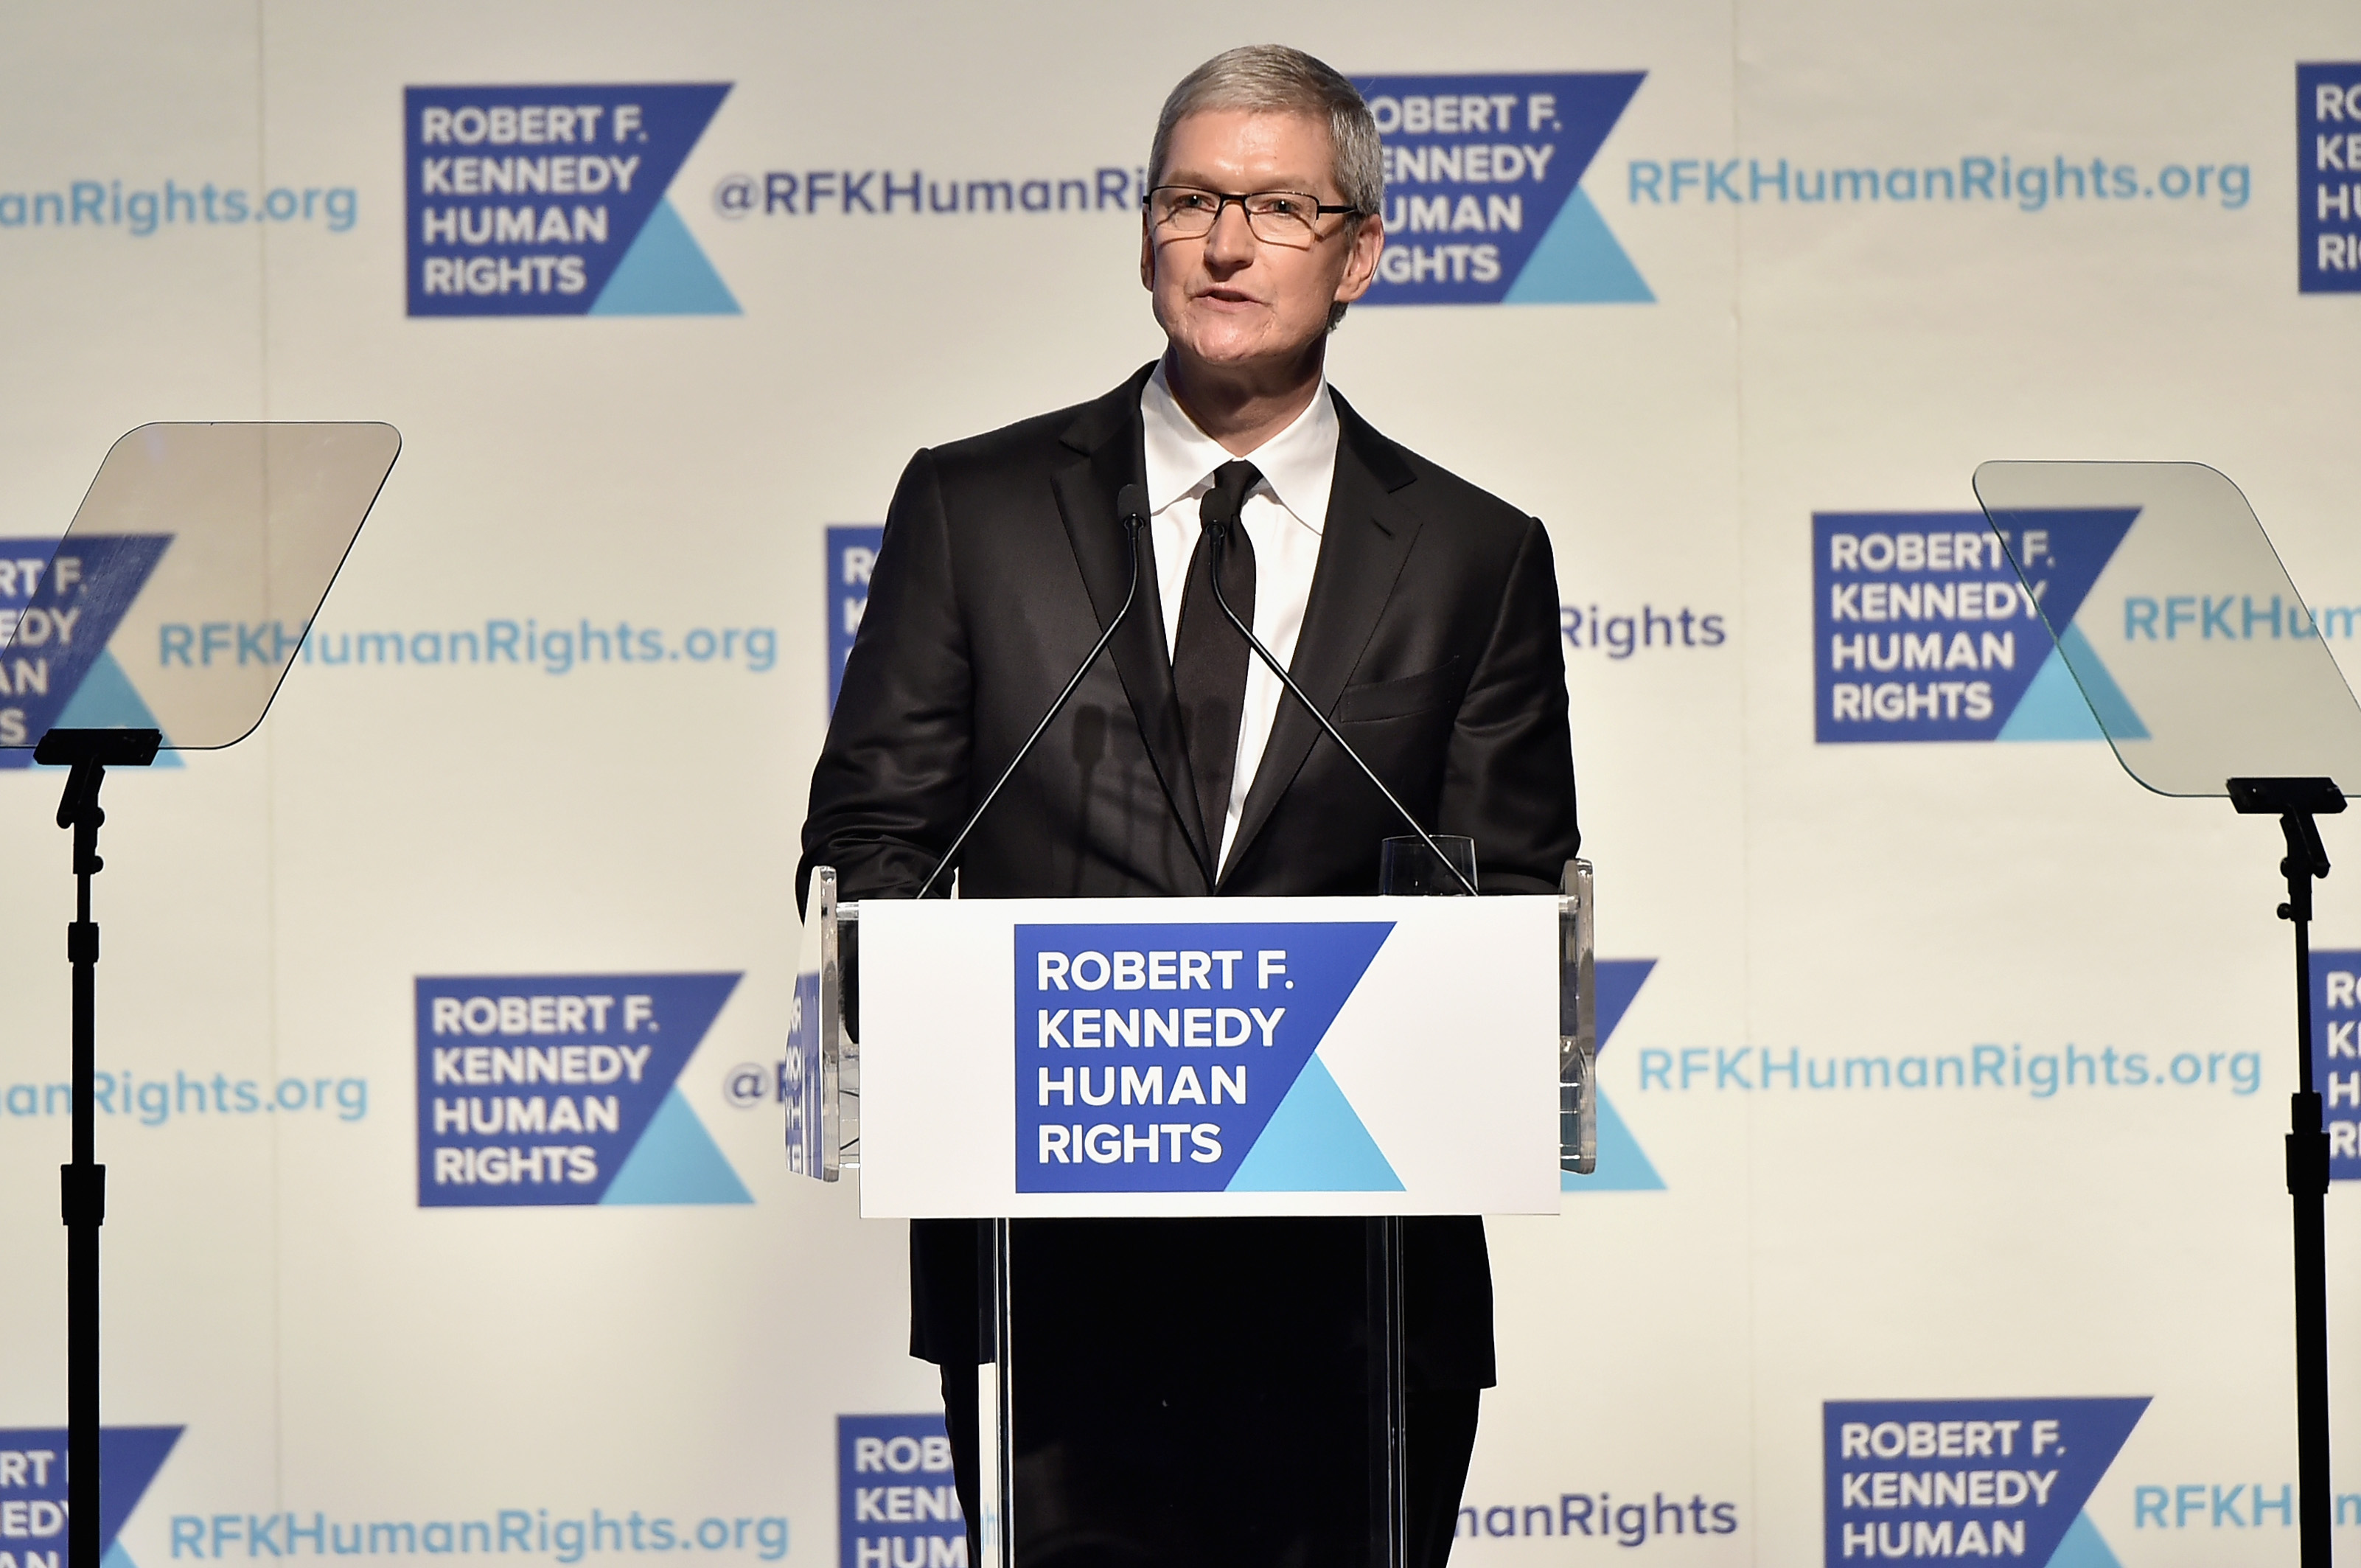 Robert F. Kennedy Human Rights Hosts The 2015 Ripple Of Hope Awards Honoring Congressman John Lewis, Apple CEO Tim Cook, Evercore Co-founder Roger Altman, And UNESCO Ambassador Marianna Vardinoyannis - Inside